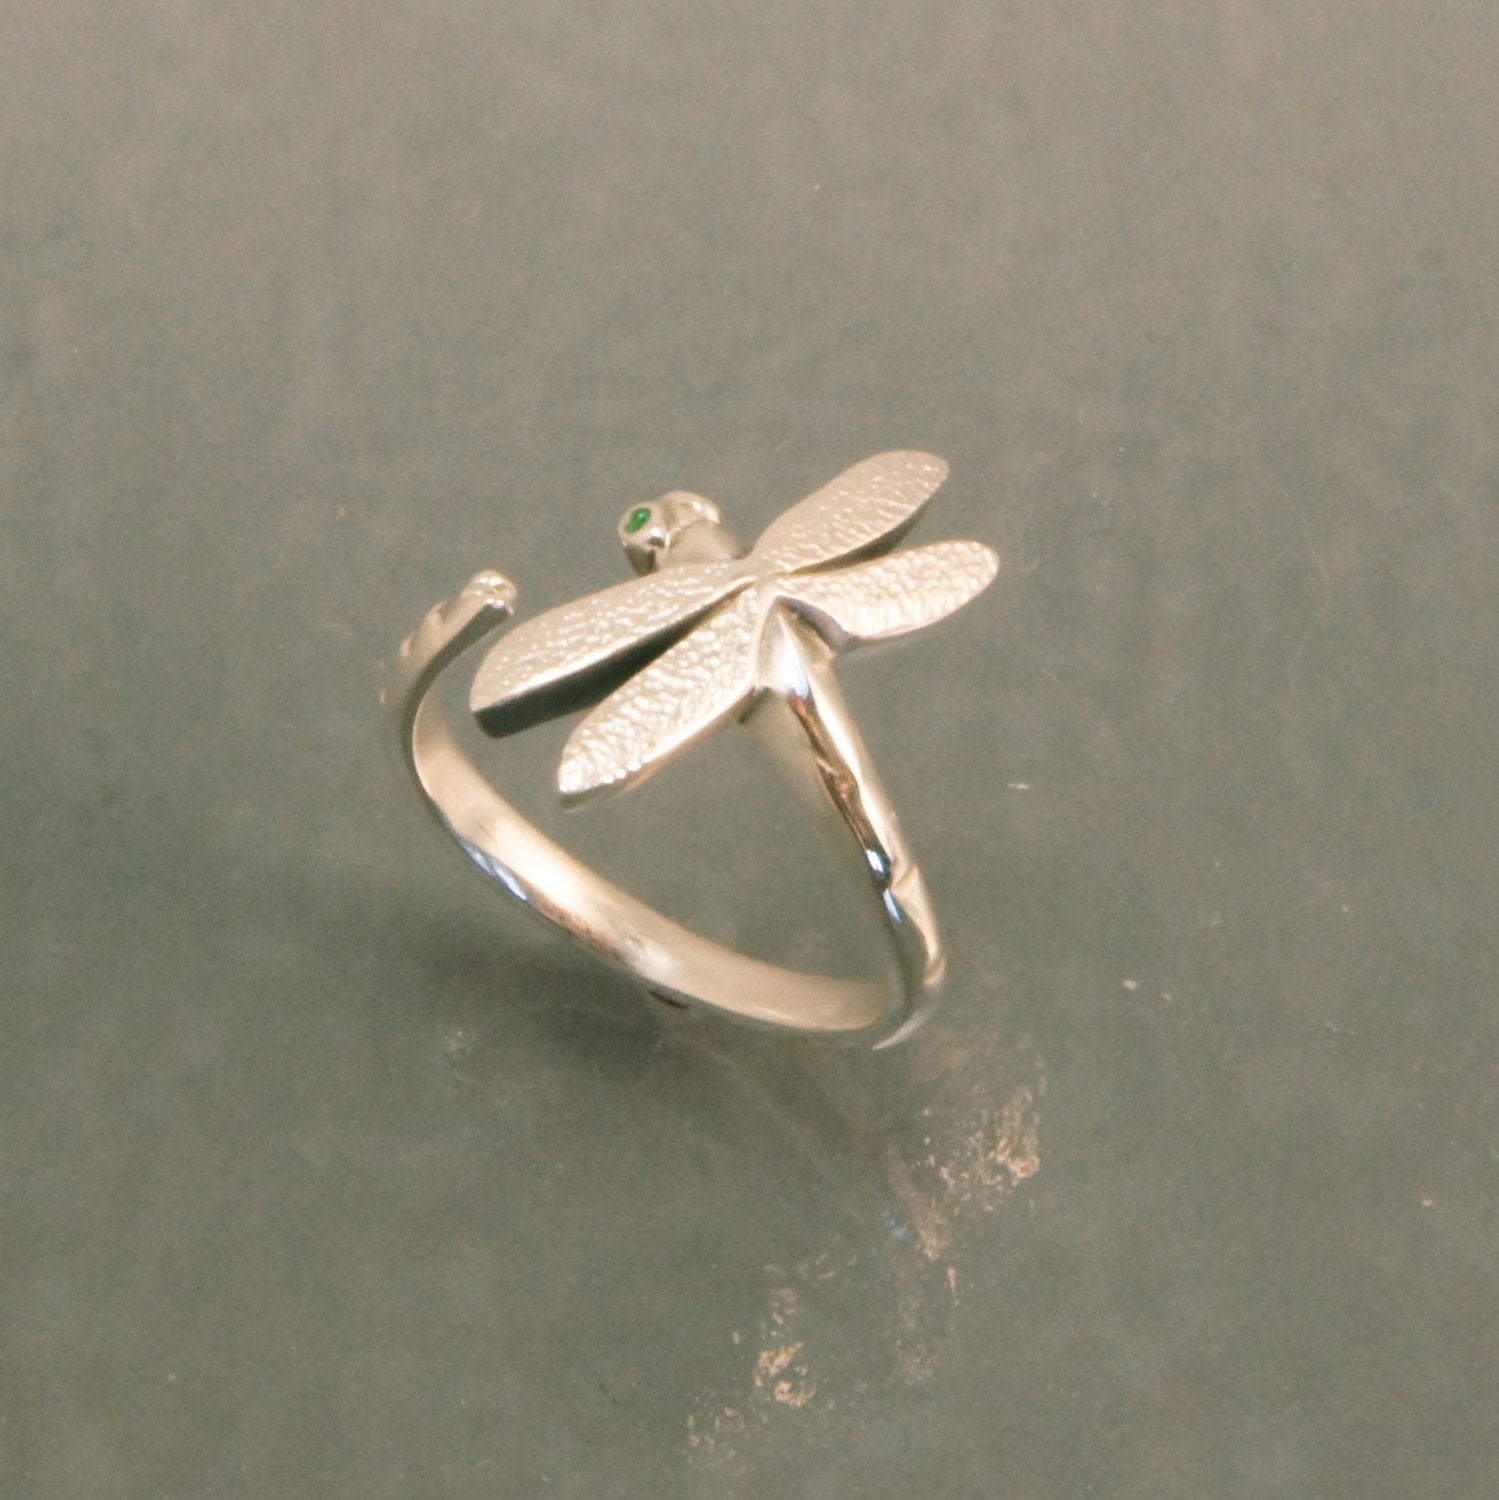 dragonfly ring in silver,  gemstone eyes